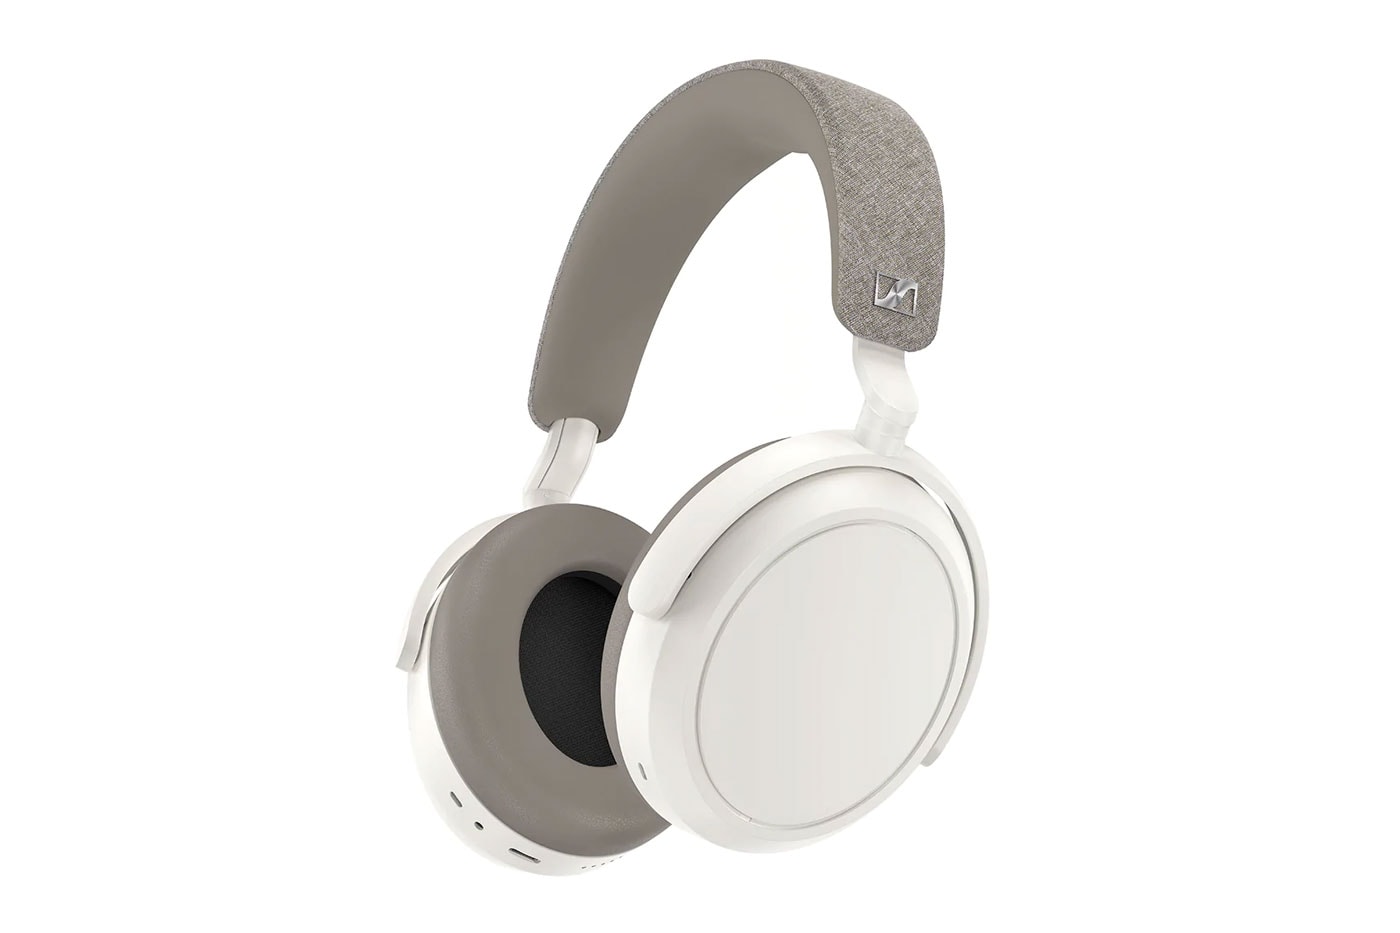 Sennheiser Momentum 4 headphones earphones release info date price flagship battery life metal leather black white touch panel august preorder 